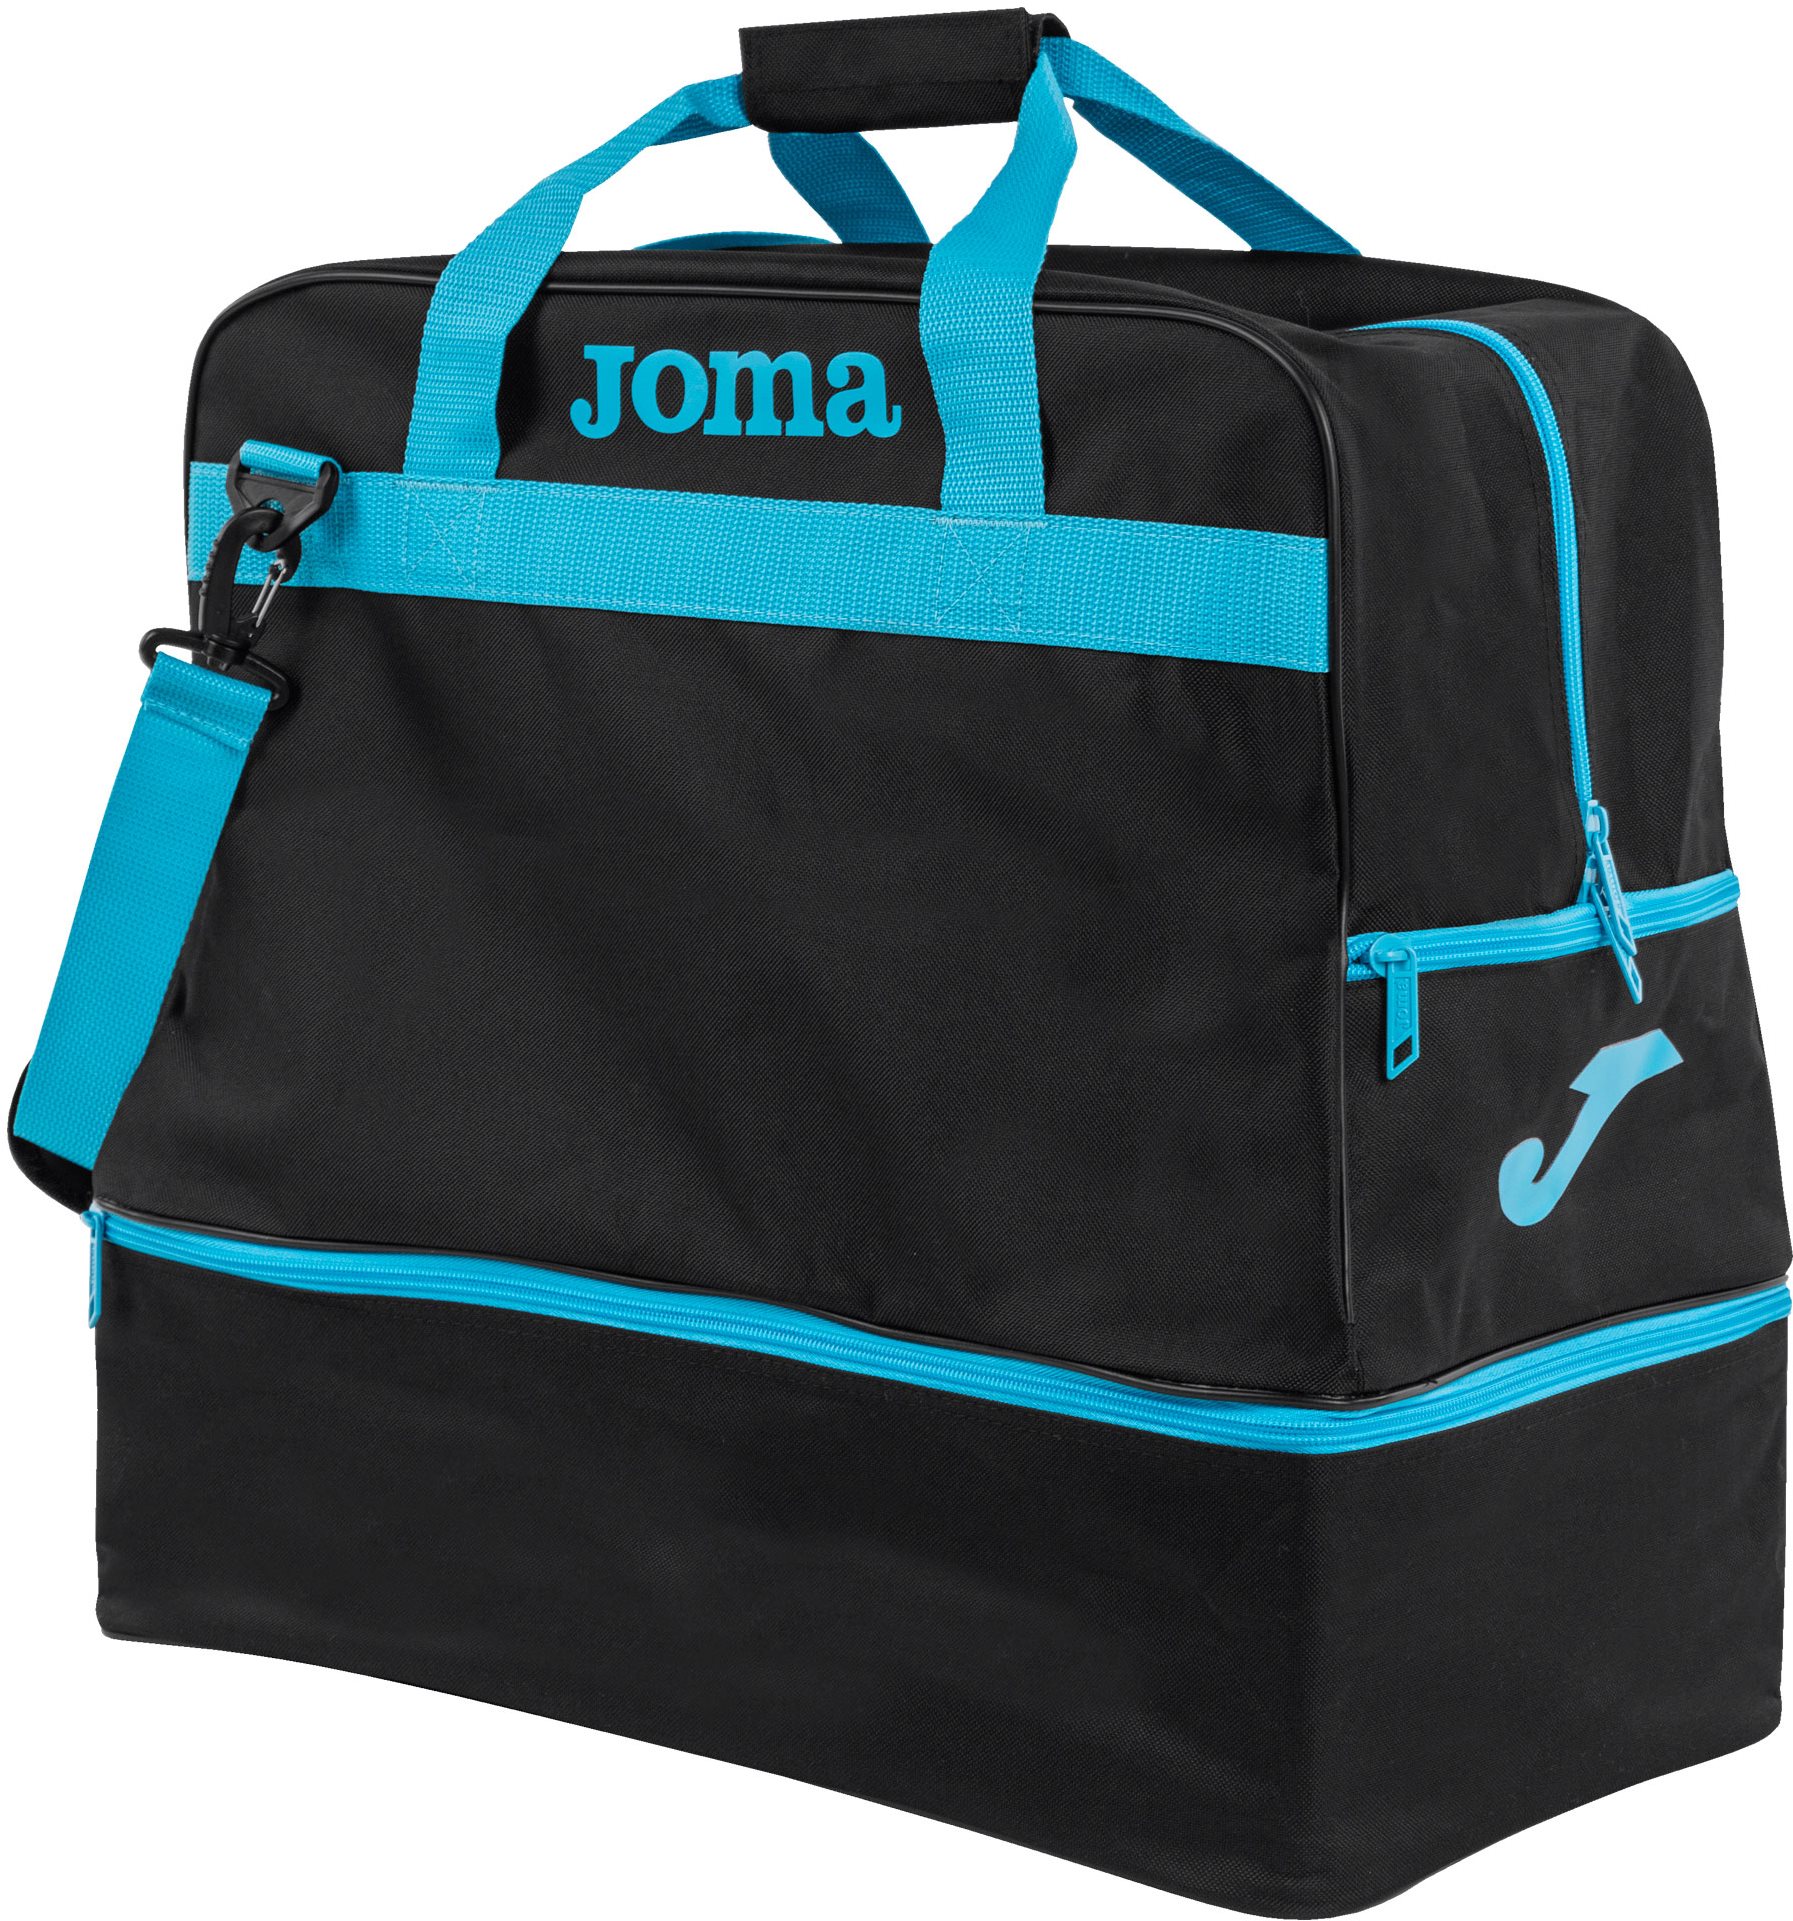 Joma Trainning III black-fluor turquoise - L